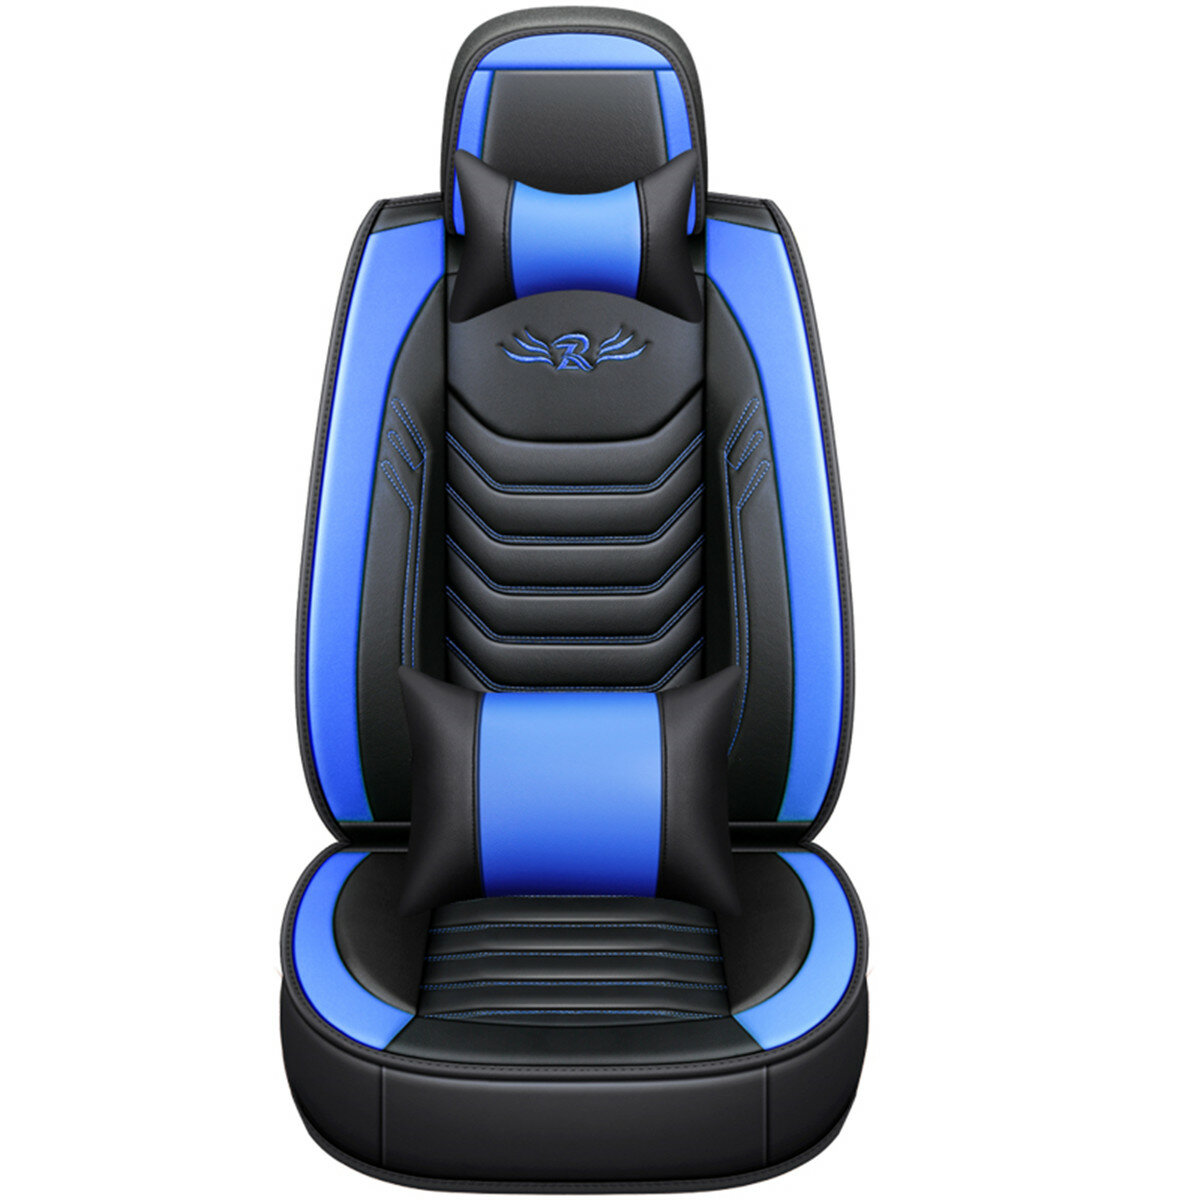 Wear-resistant pu leather car seat cover 65 * 55 * 25cm Sale - Banggood.com